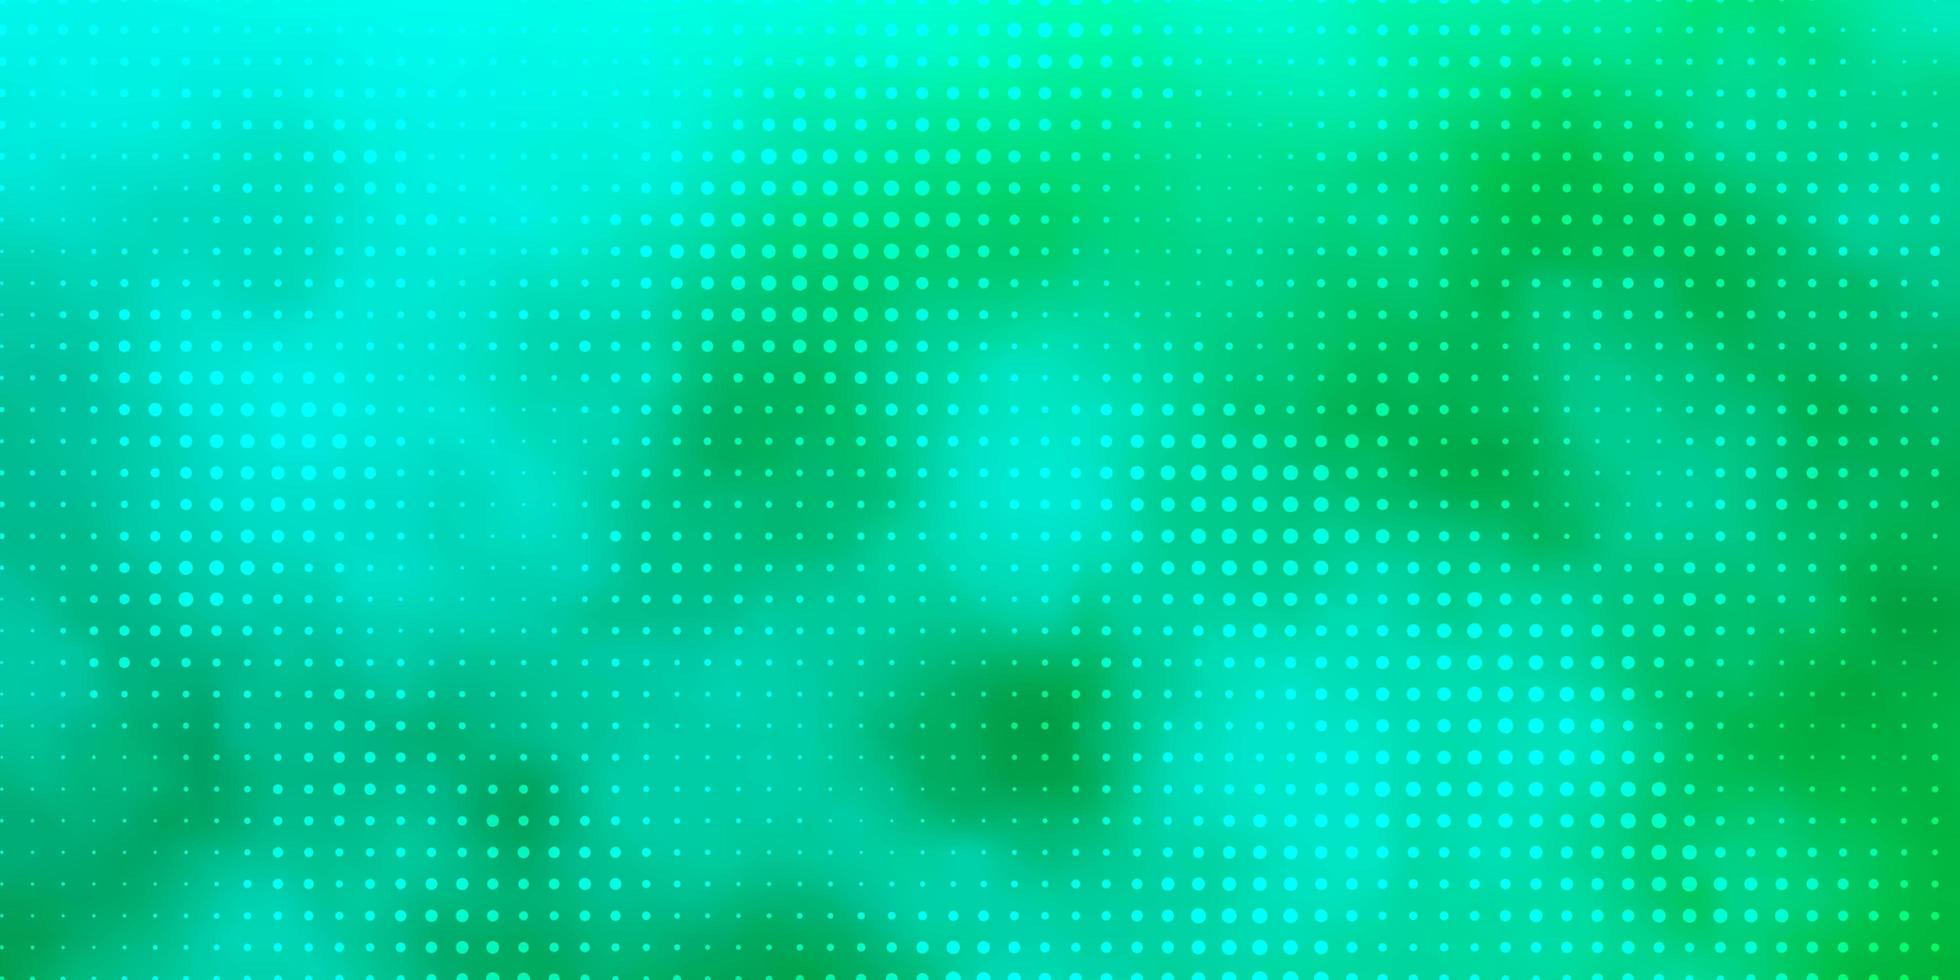 hellgrünes Vektorlayout mit Kreisformen. vektor